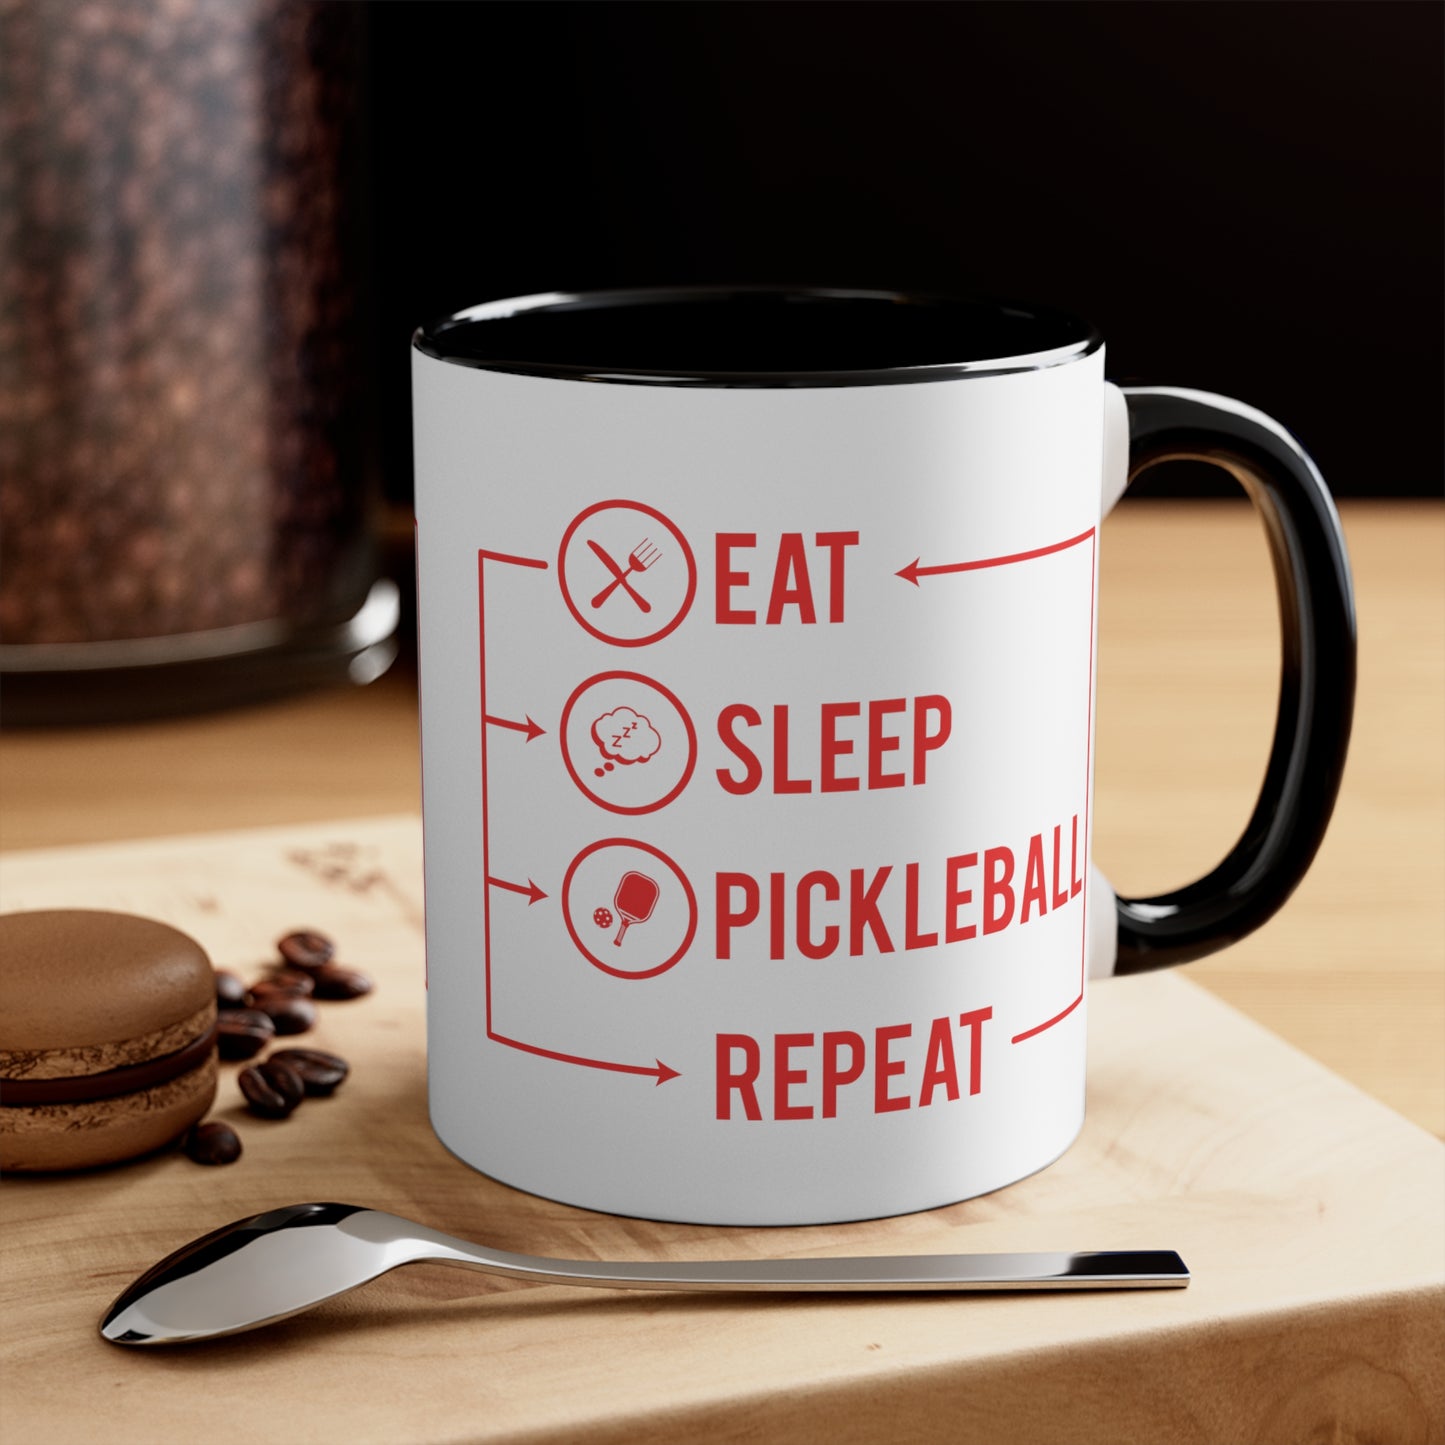 Pickleball Passion: The 'Eat Sleep Pickleball Repeat' Mug